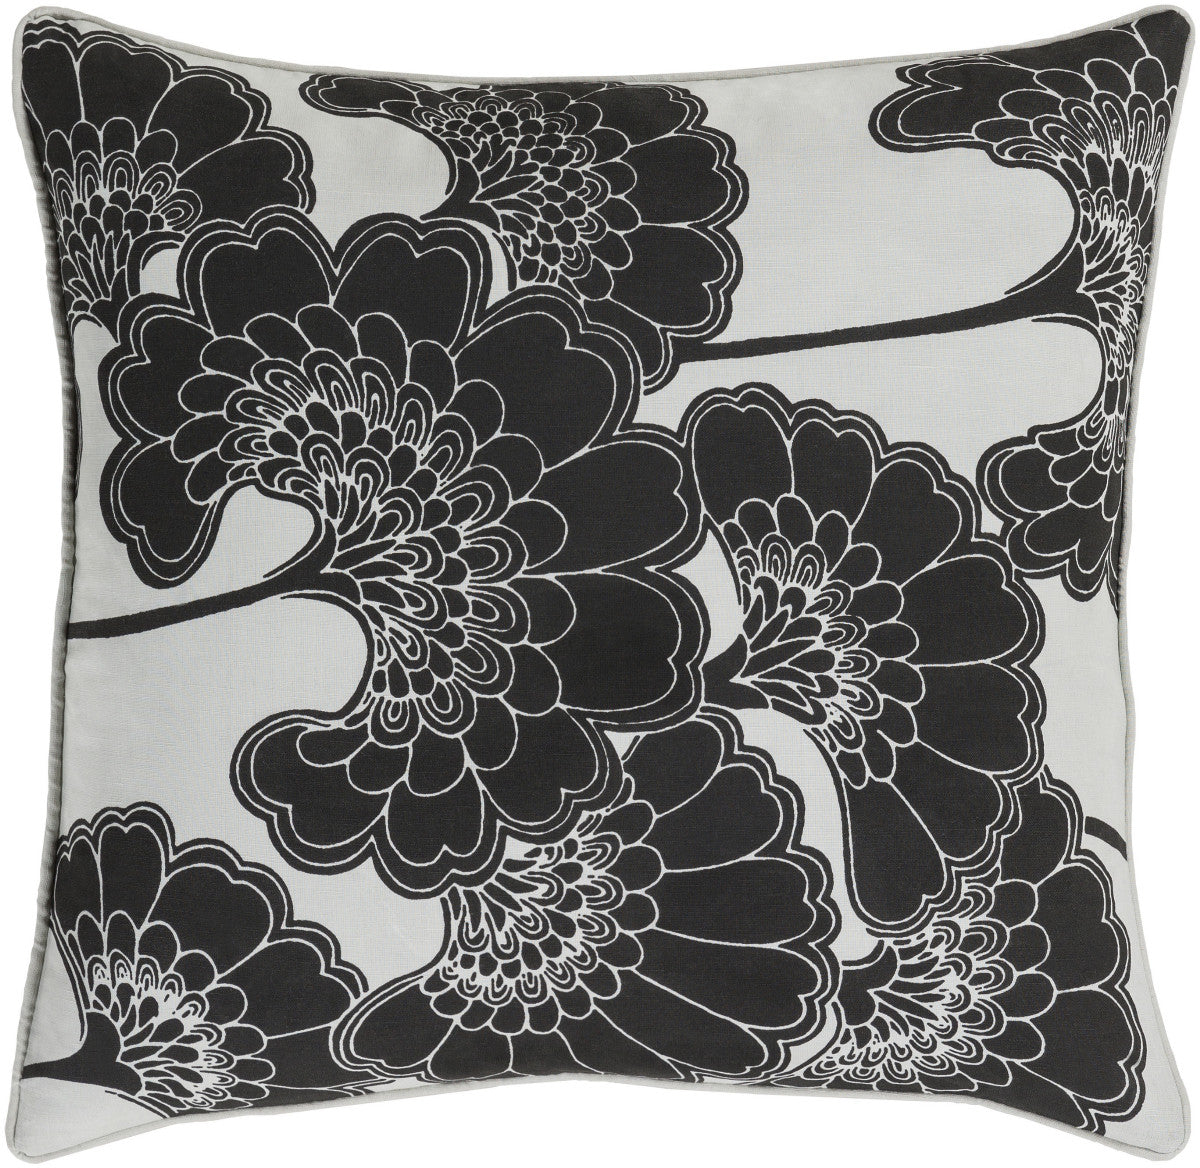 Surya Japanese Floral JA002 Pillow by Florence Broadhurst